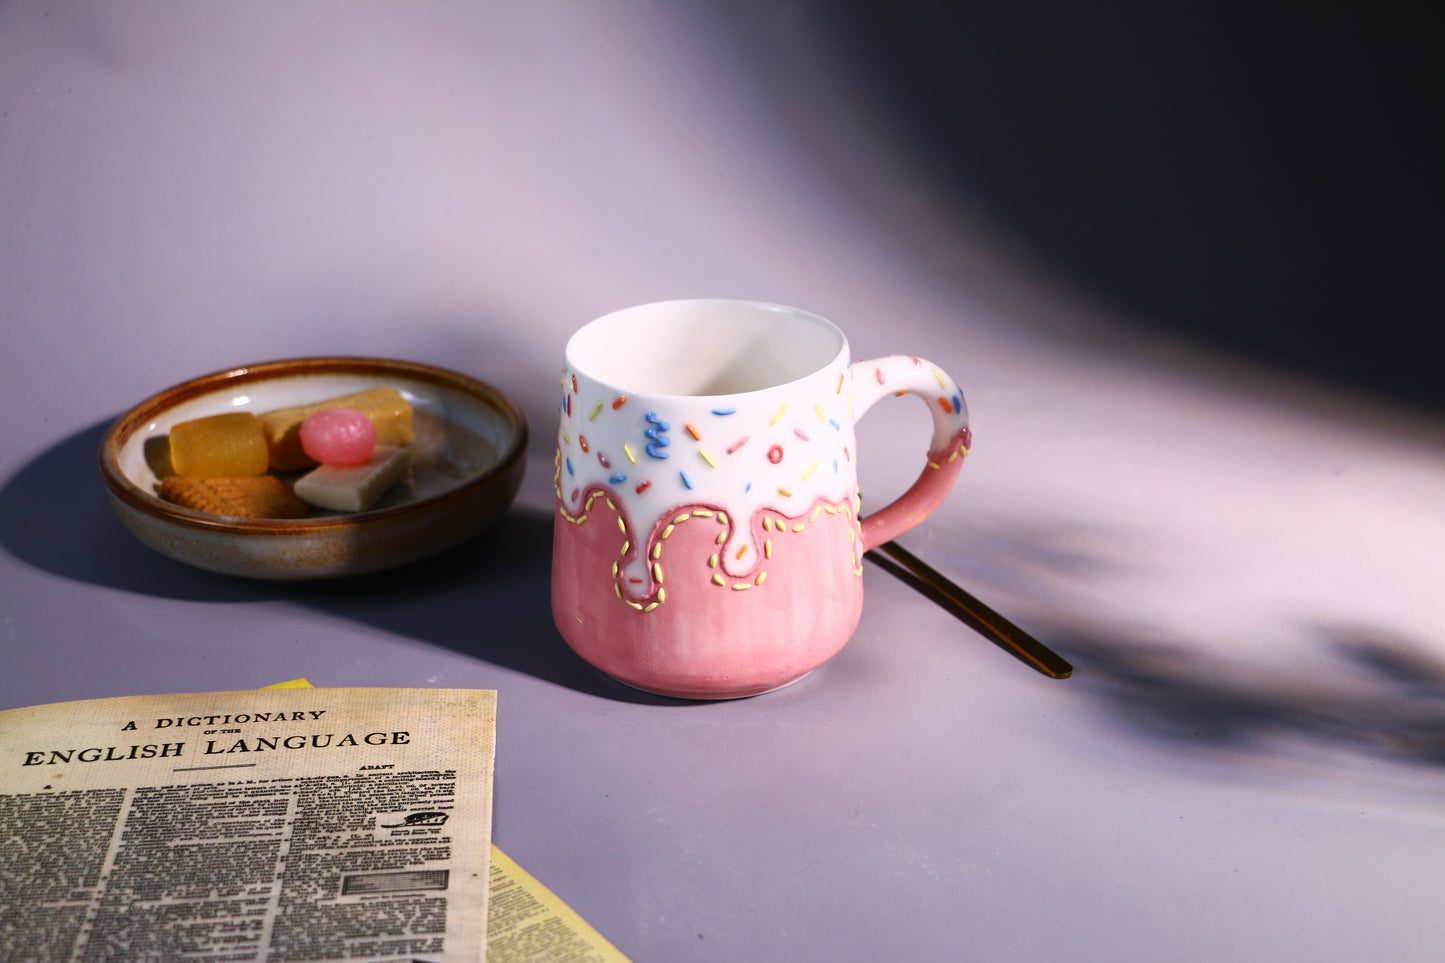 Ice-cream Ceramic Coffee Mug, Personalized Handmade Pottery Mug for Gifts